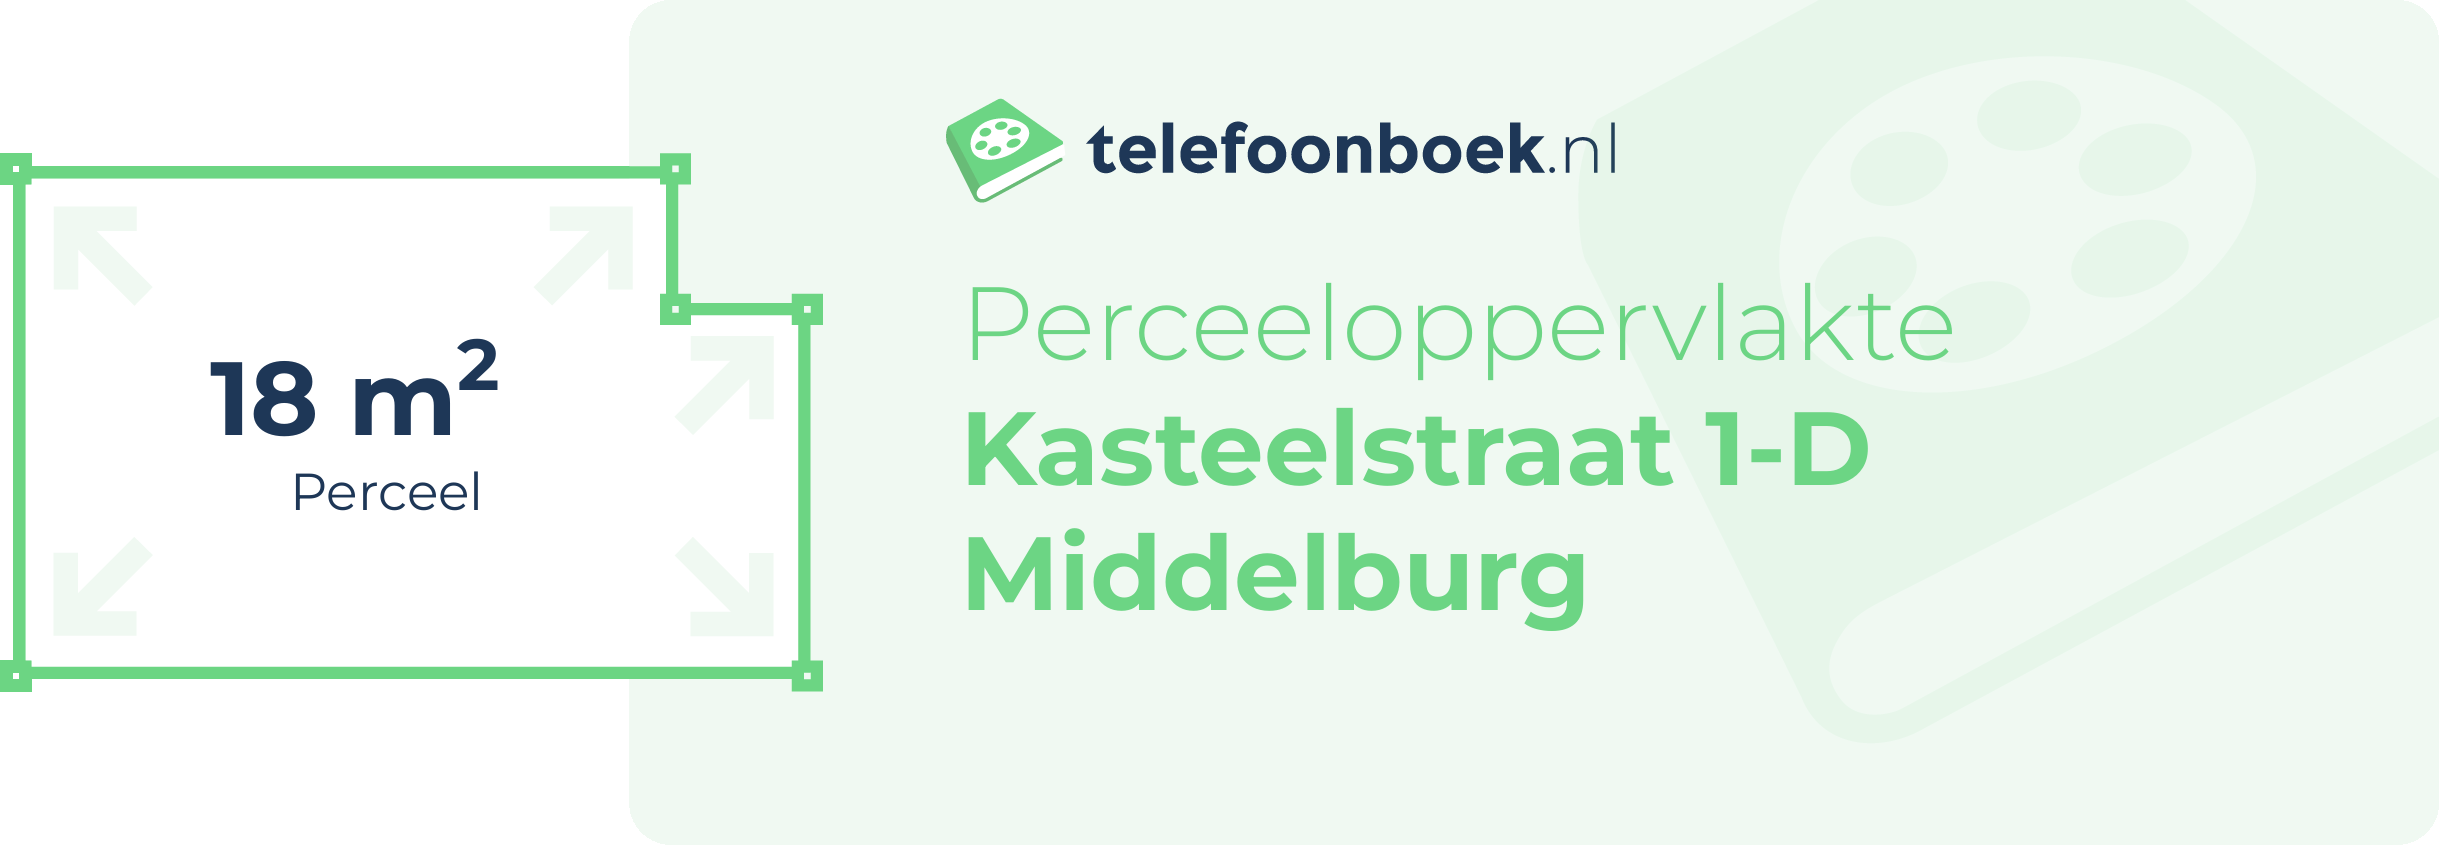 Perceeloppervlakte Kasteelstraat 1-D Middelburg